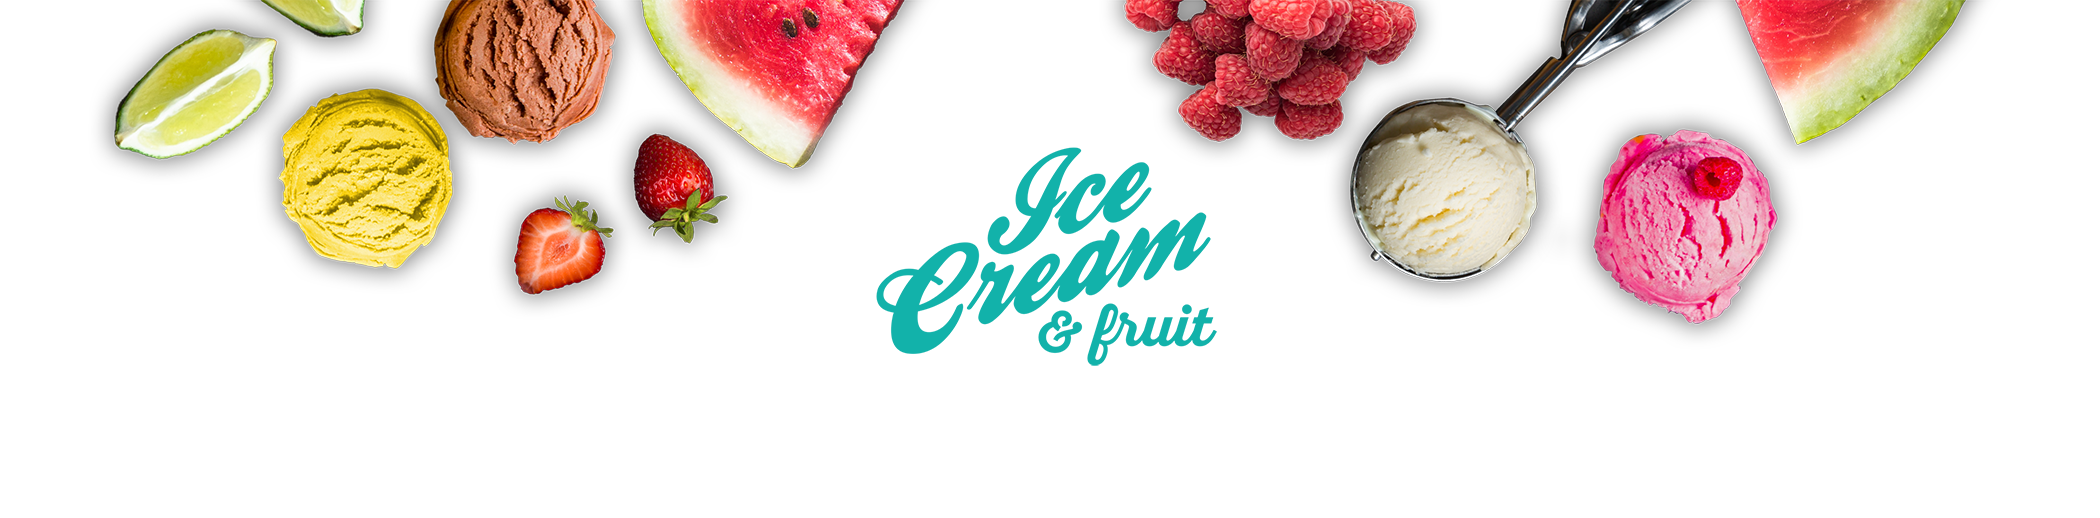 Ice & Fruit